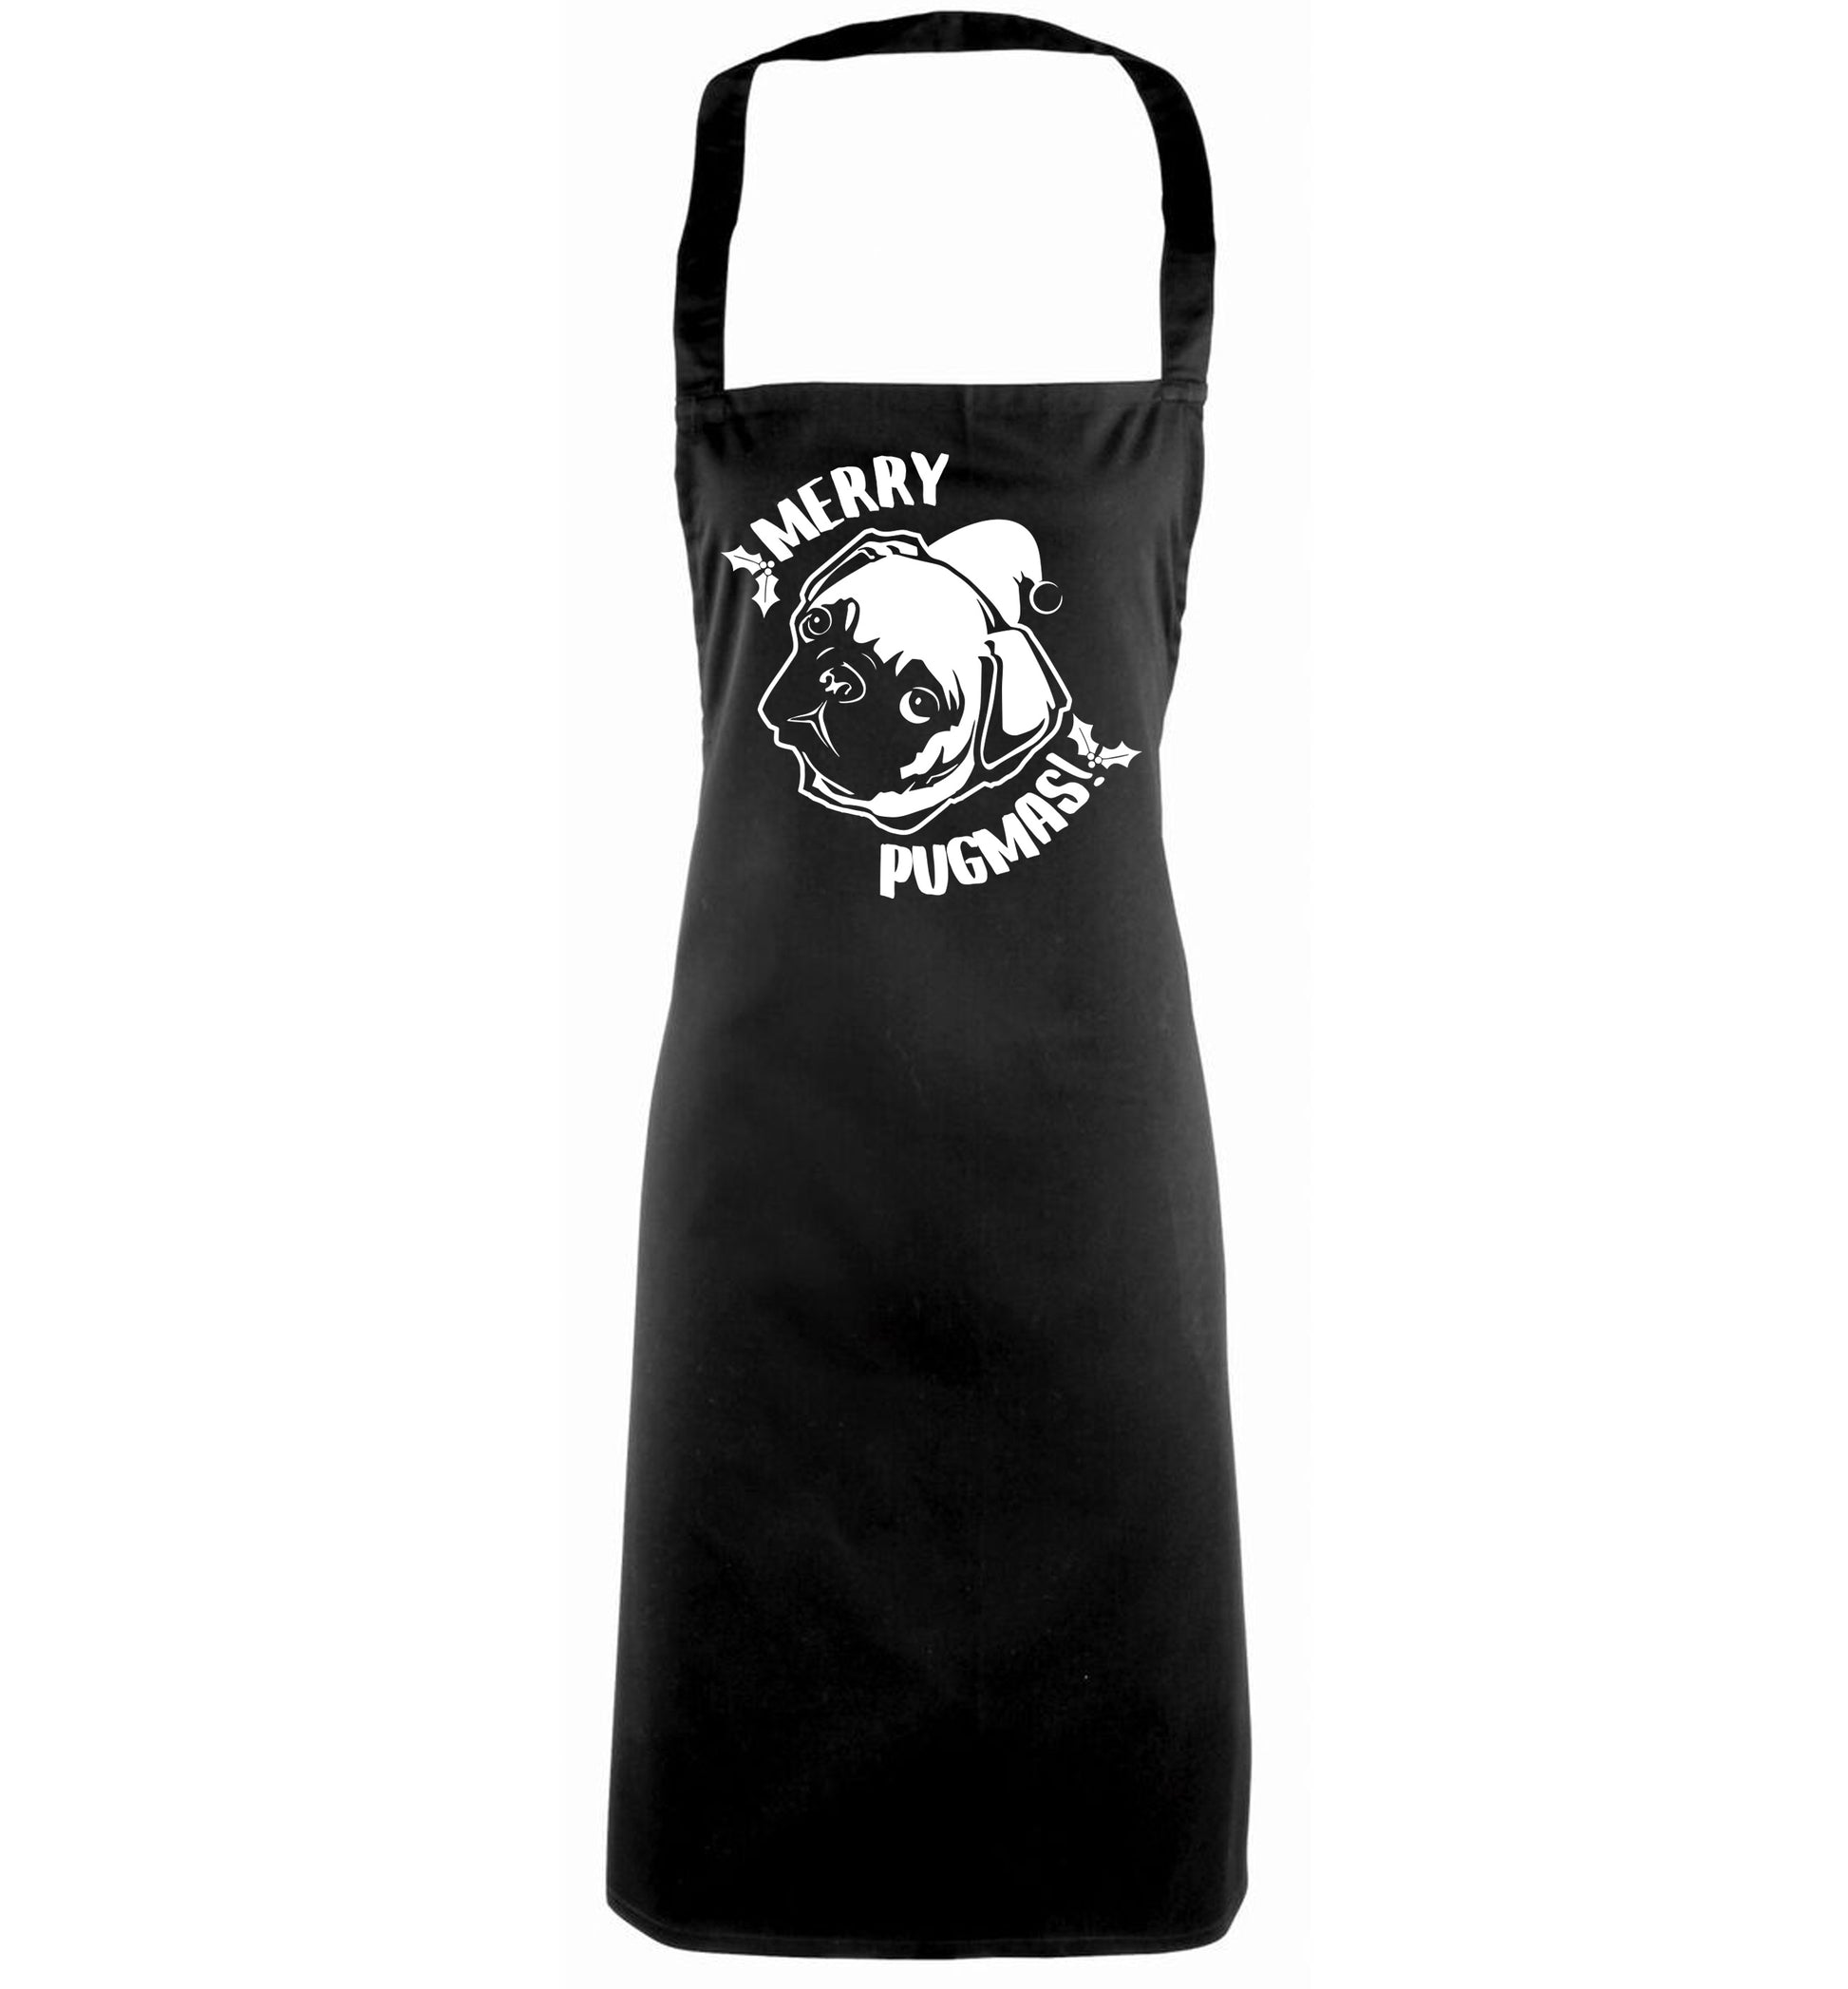 Merry Pugmas black apron